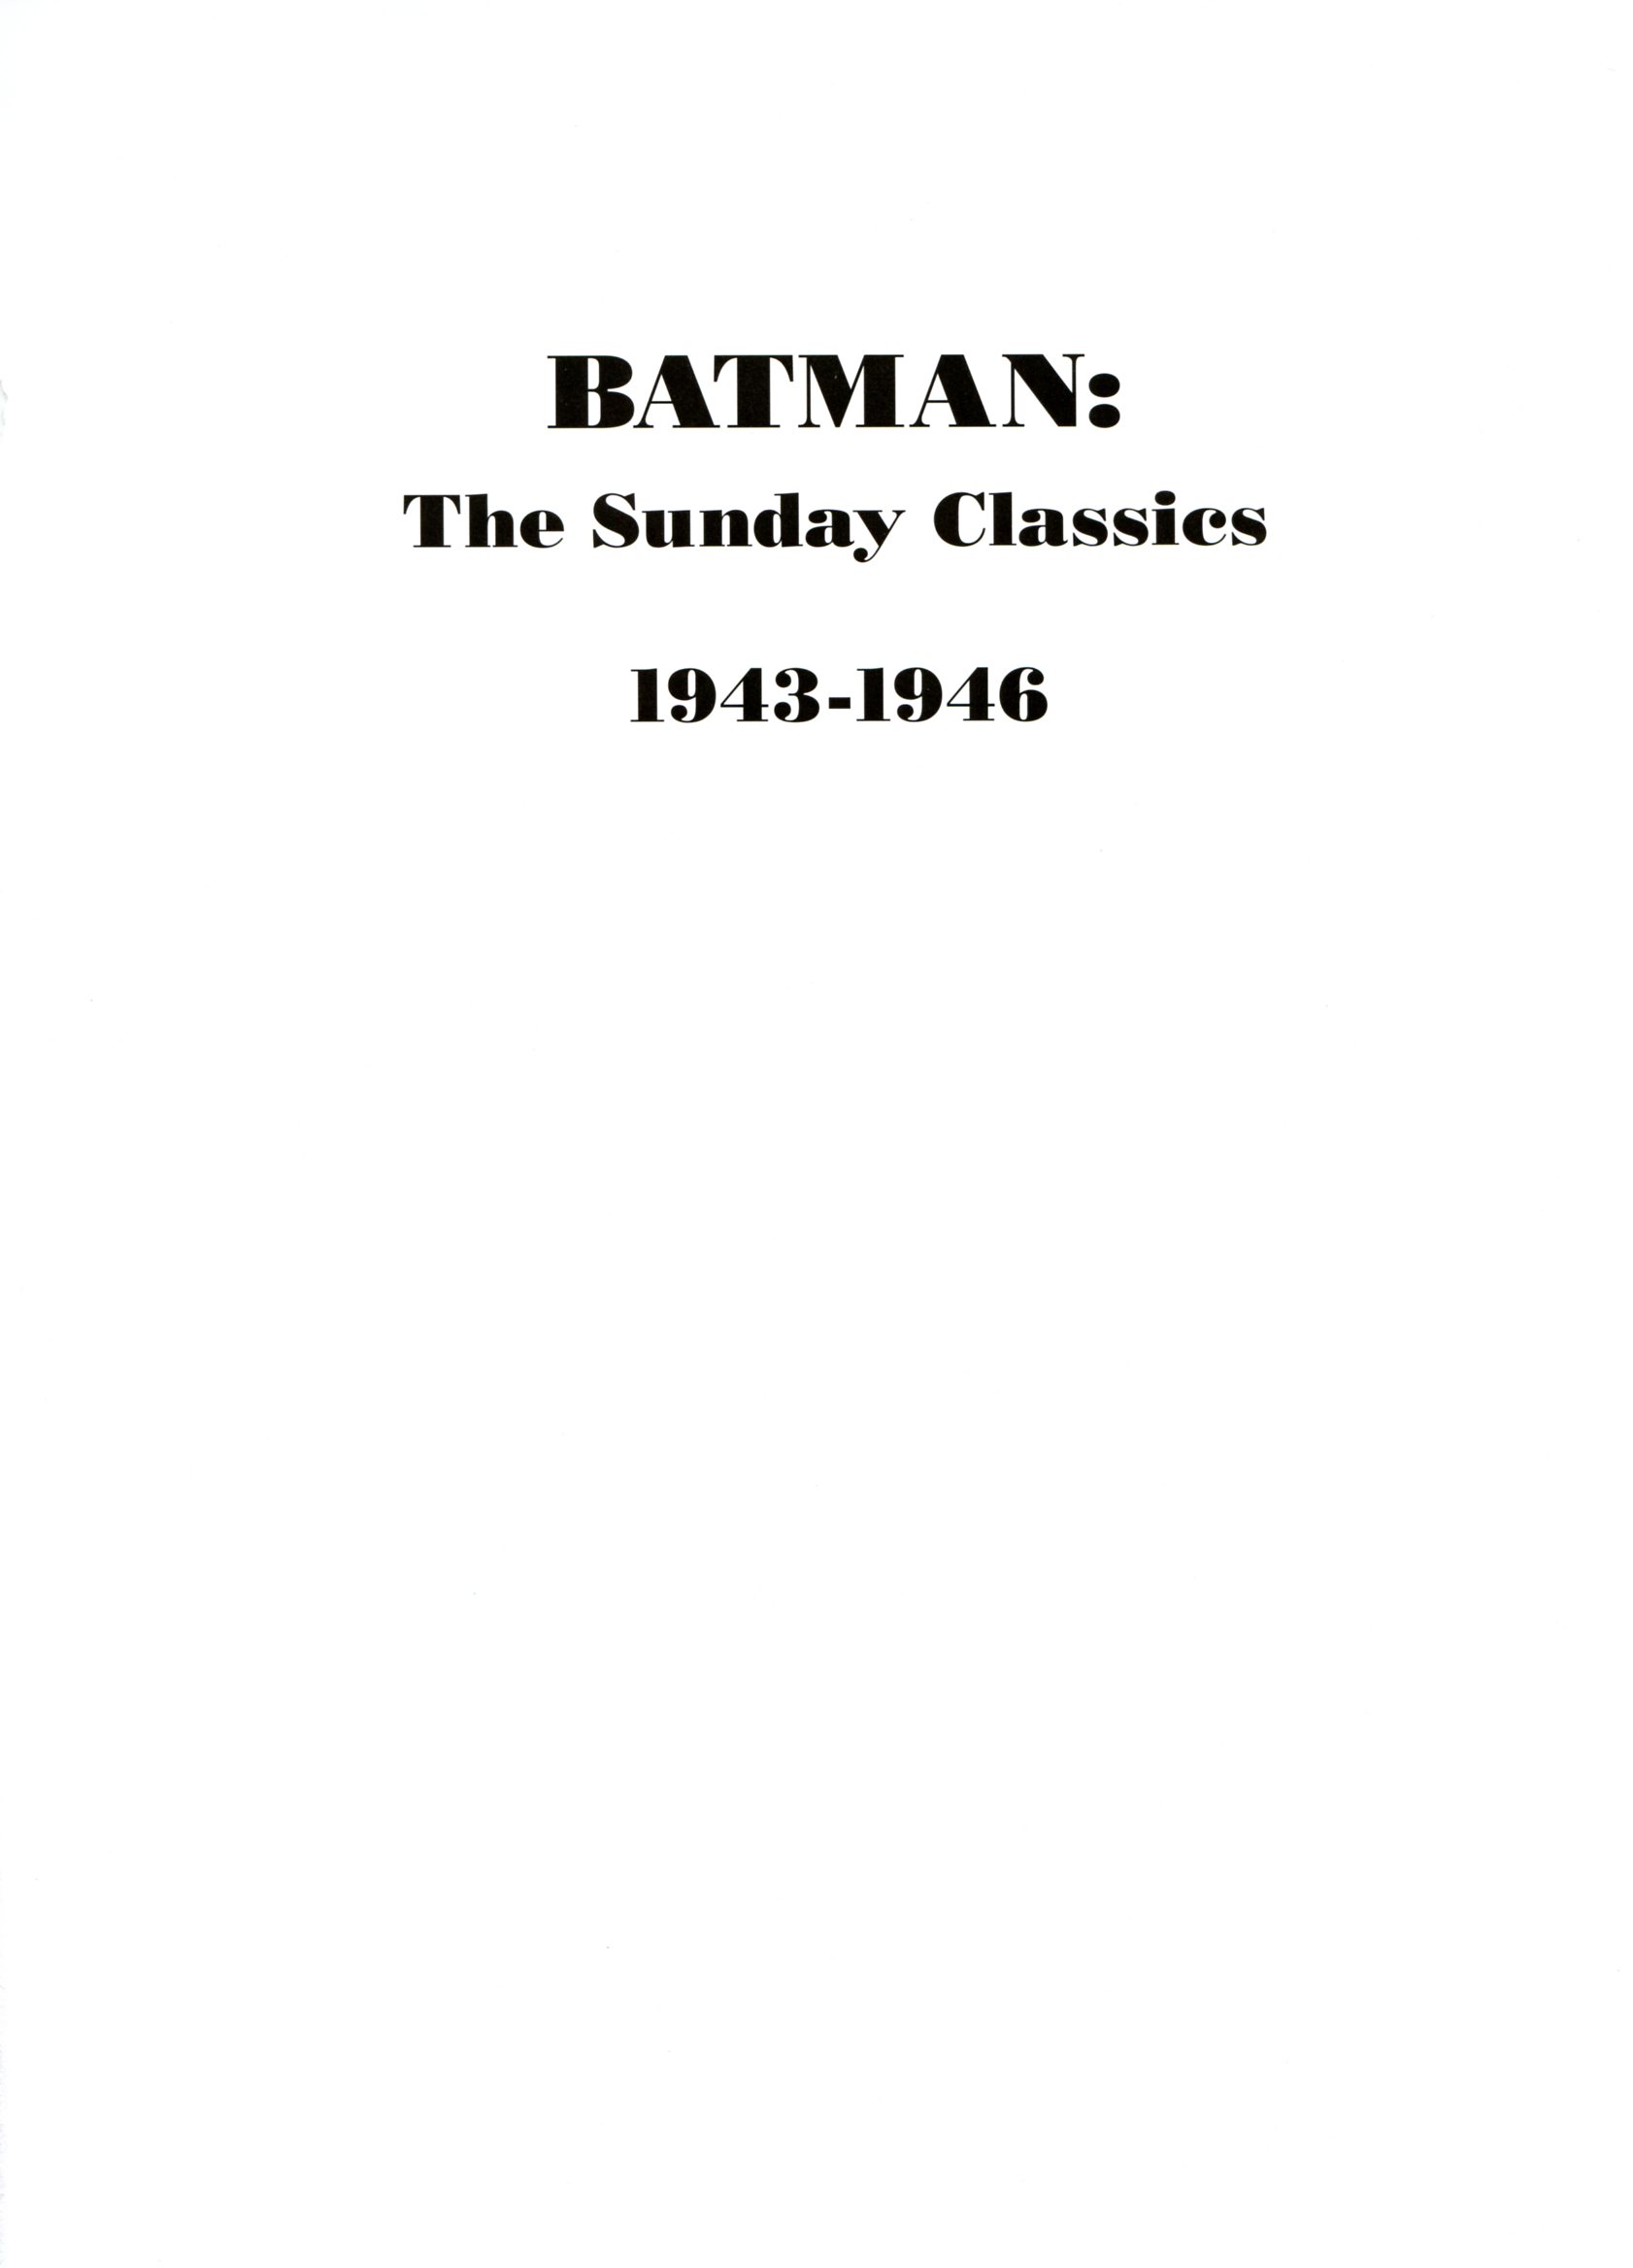 Read online Batman: The Sunday Classics comic -  Issue # TPB - 8